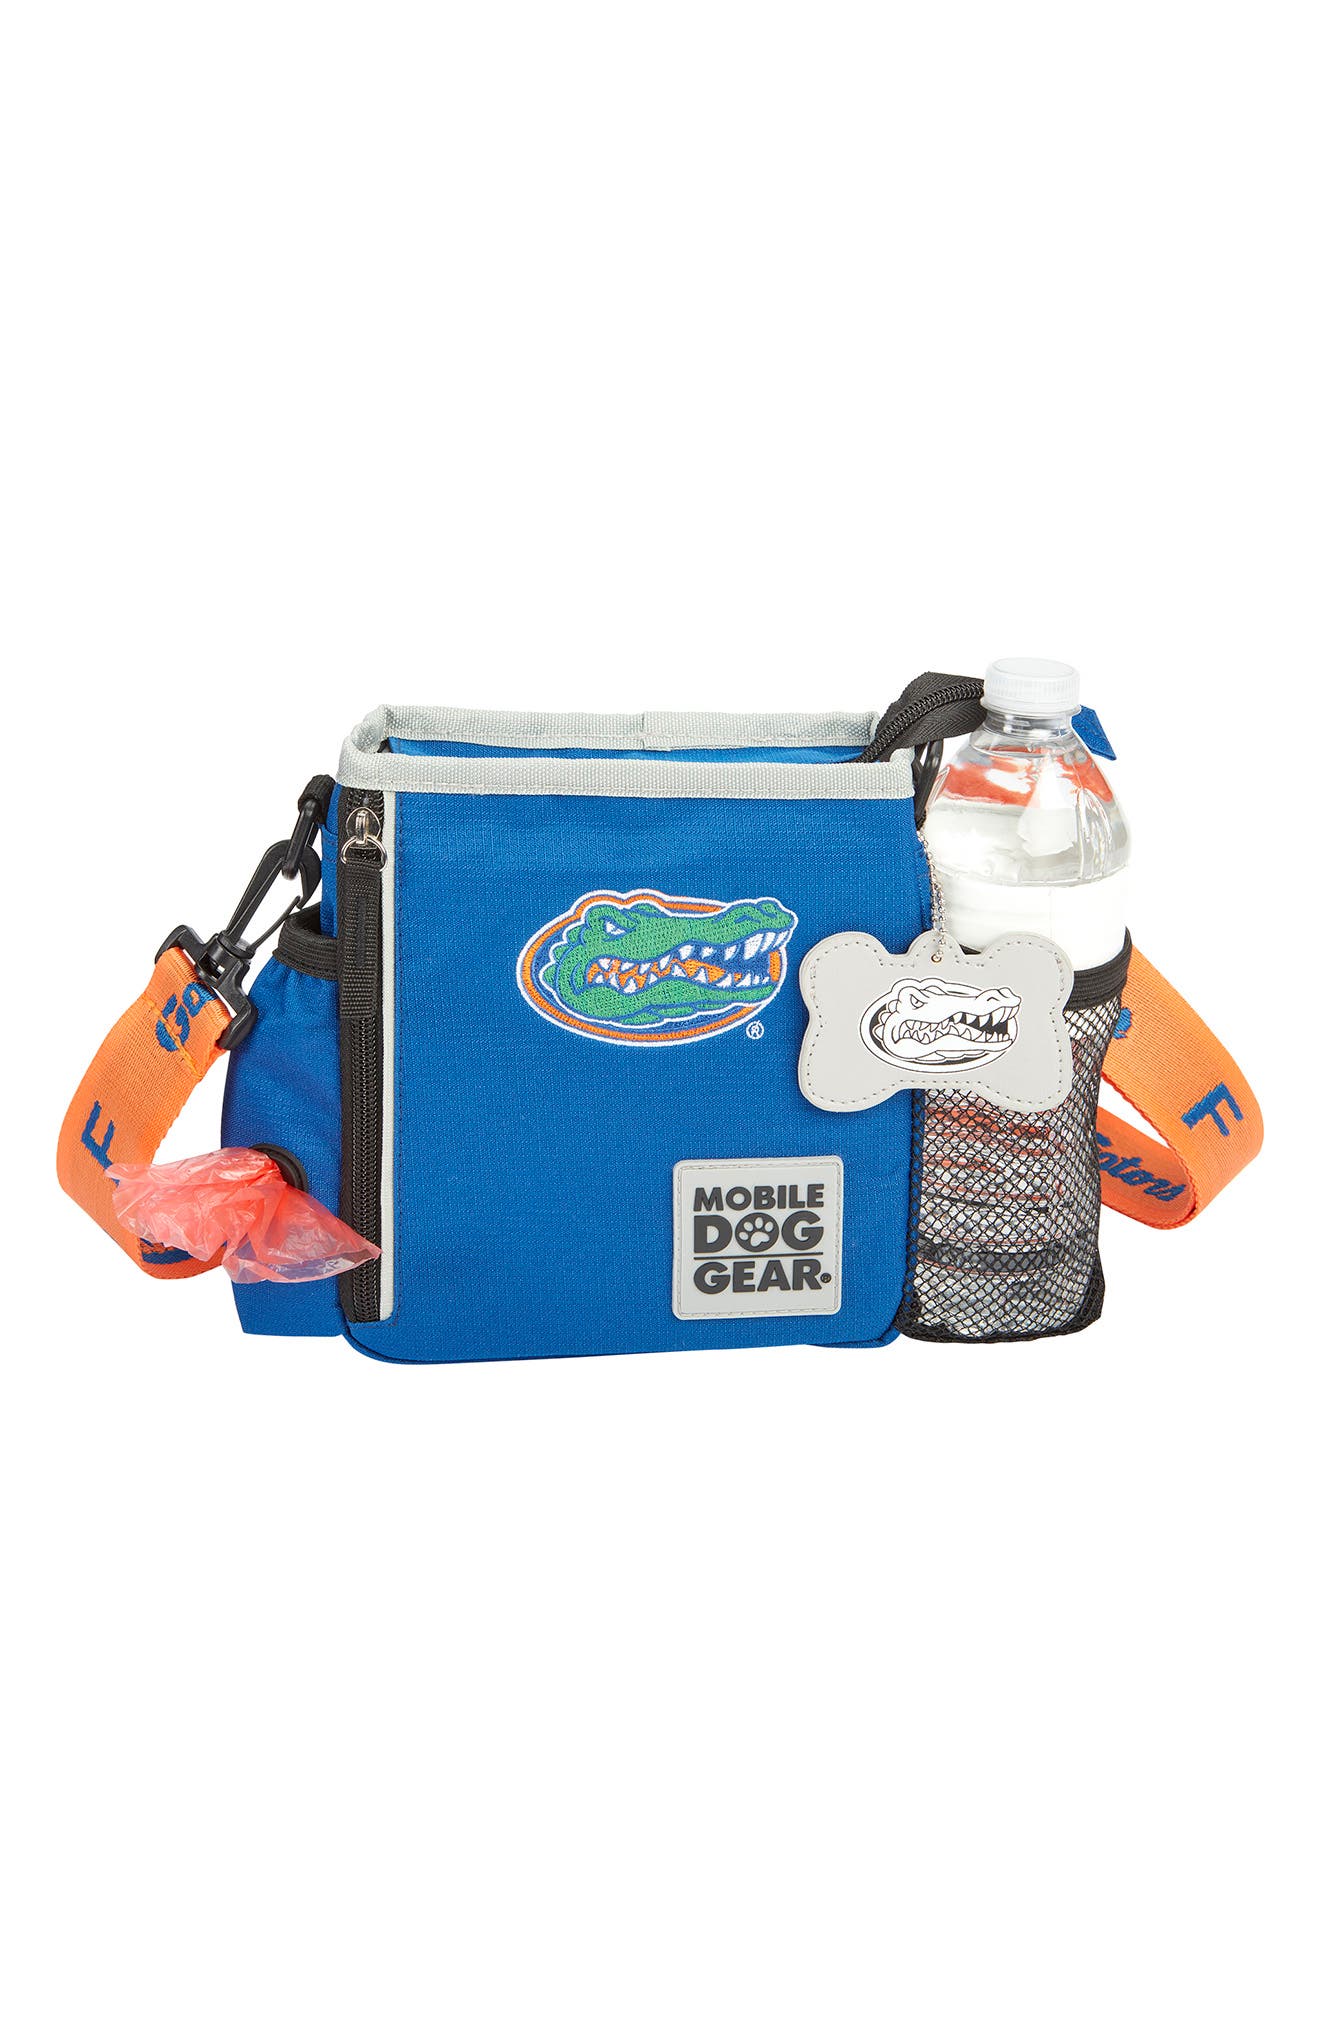 NCAA Florida Gators Adult Sunglass and Bag Set Blue 